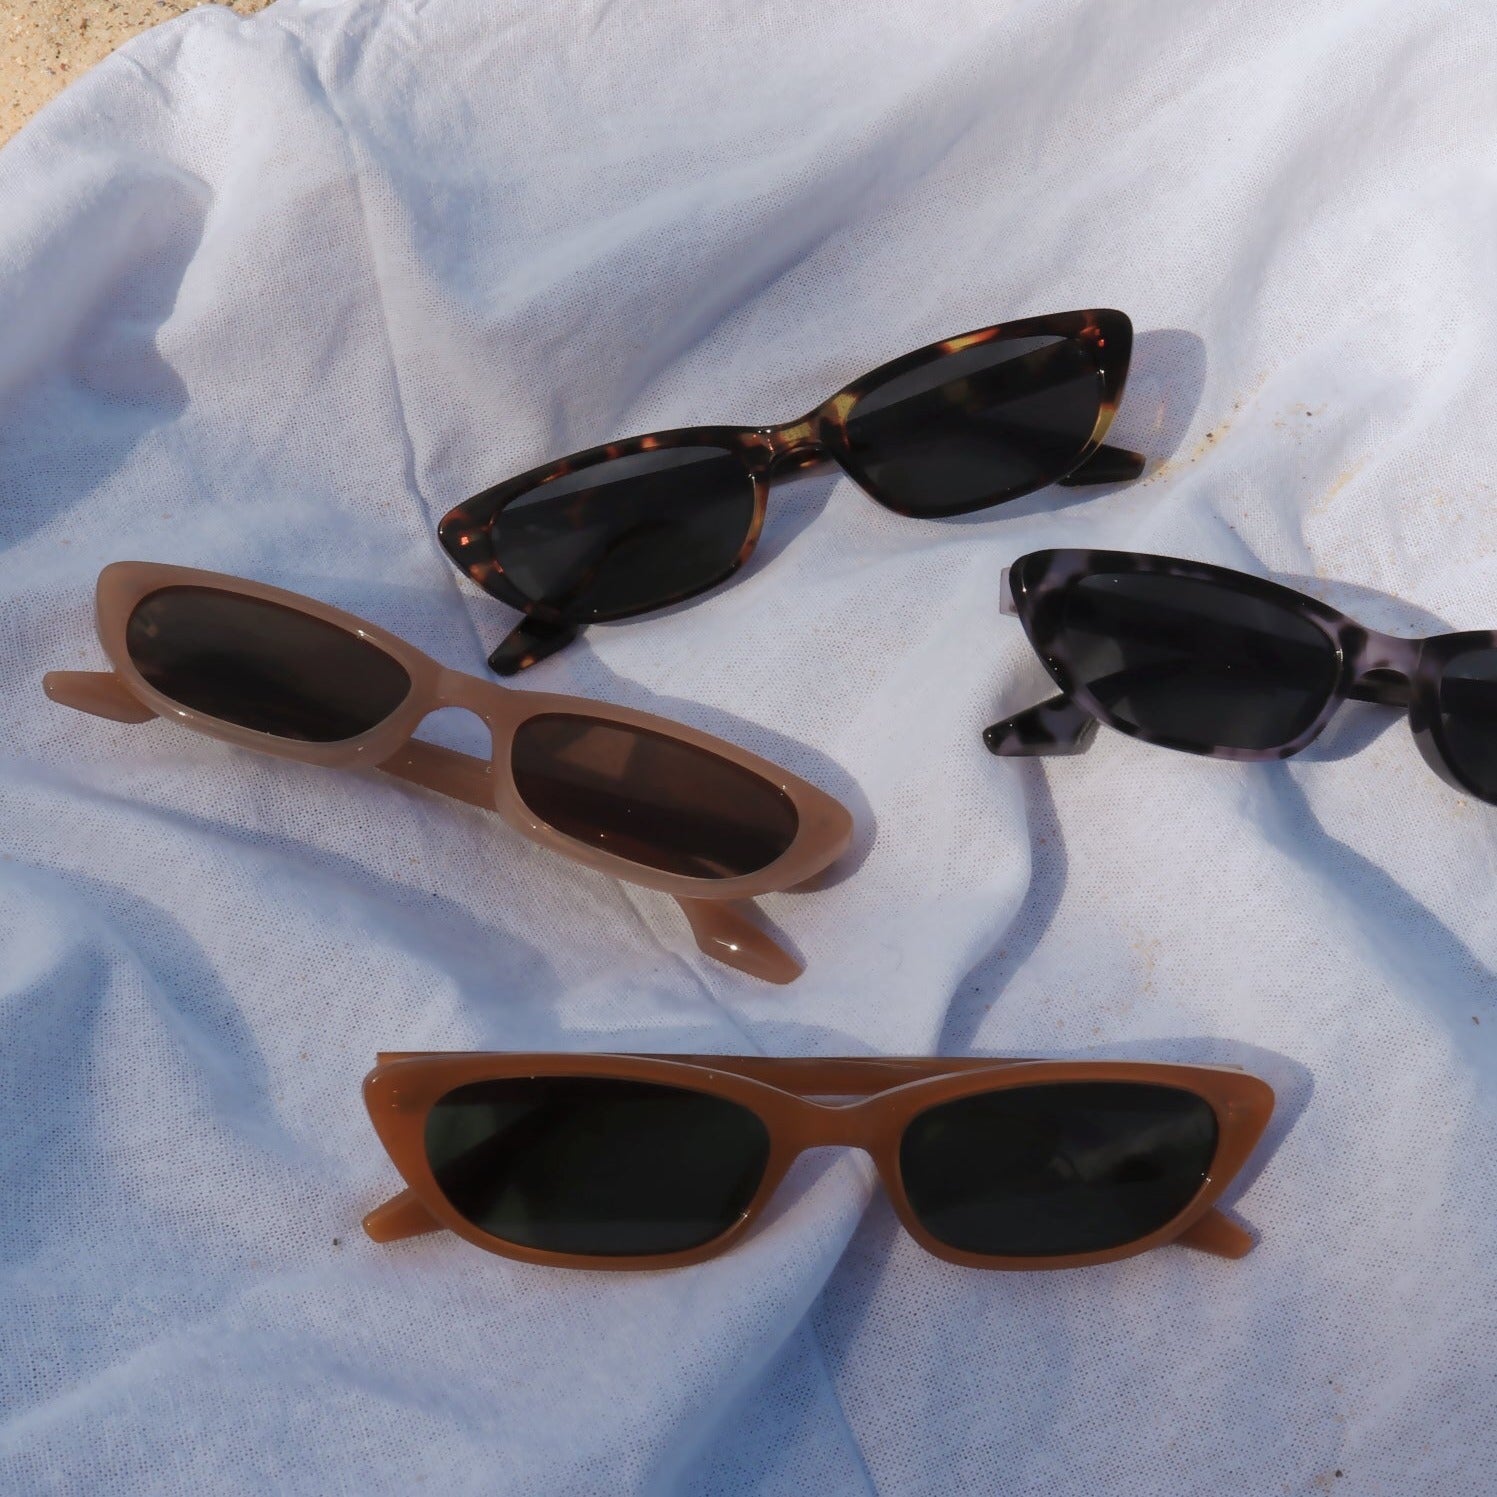 Stylish and Trendy Sunglasses for Men and Women - UV Protection polarised Eyewear for Fashion Enthusiasts